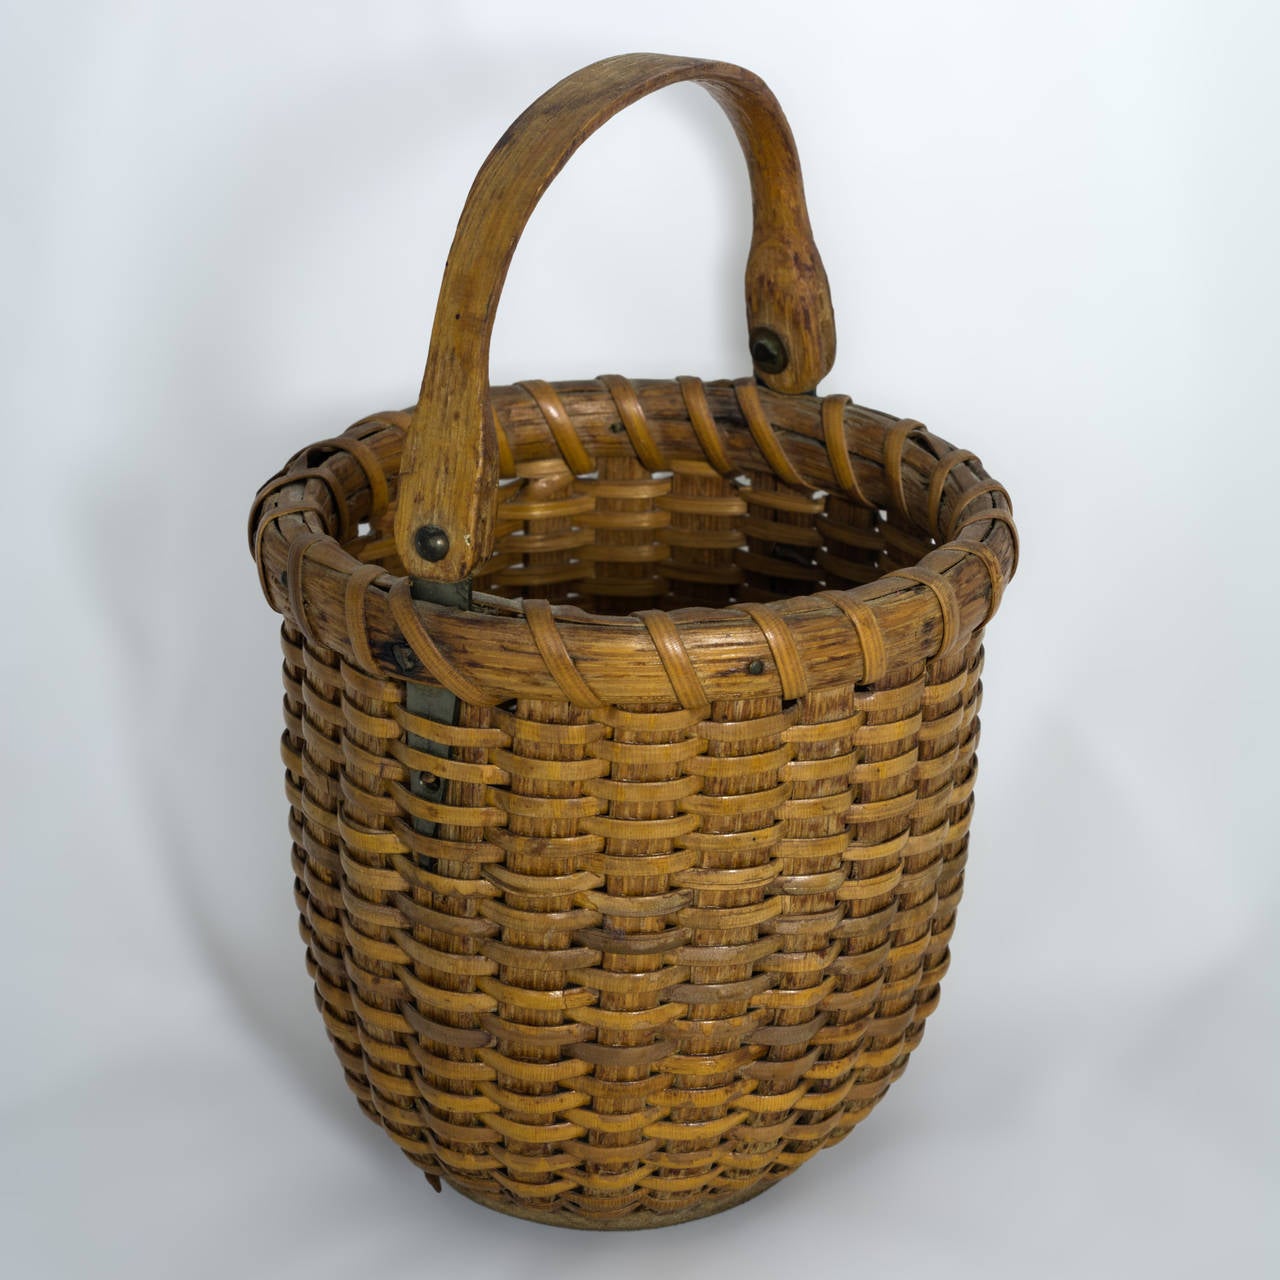 American Craftsman Nantucket Lightship Basket Attributed to C. Mitchy Ray, circa 1940